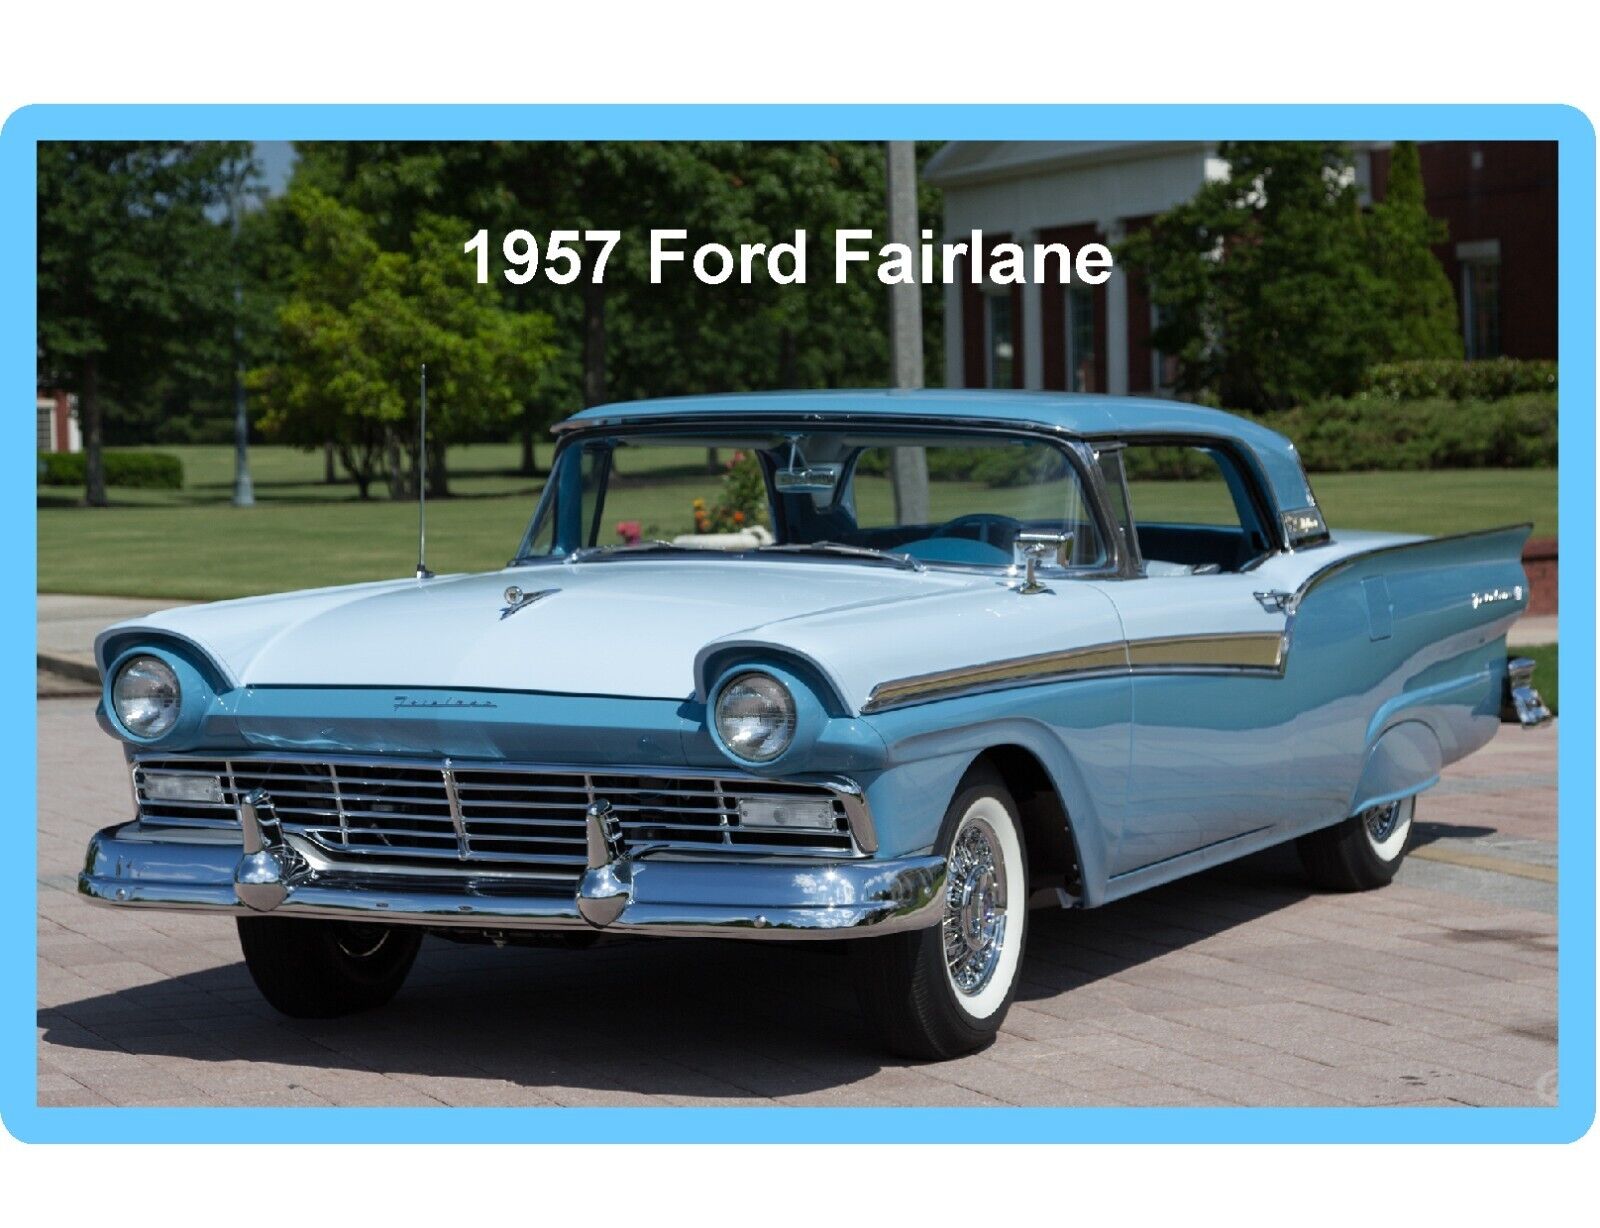 1957 Ford Fairlane Refrigerator / Tool Box  Magnet